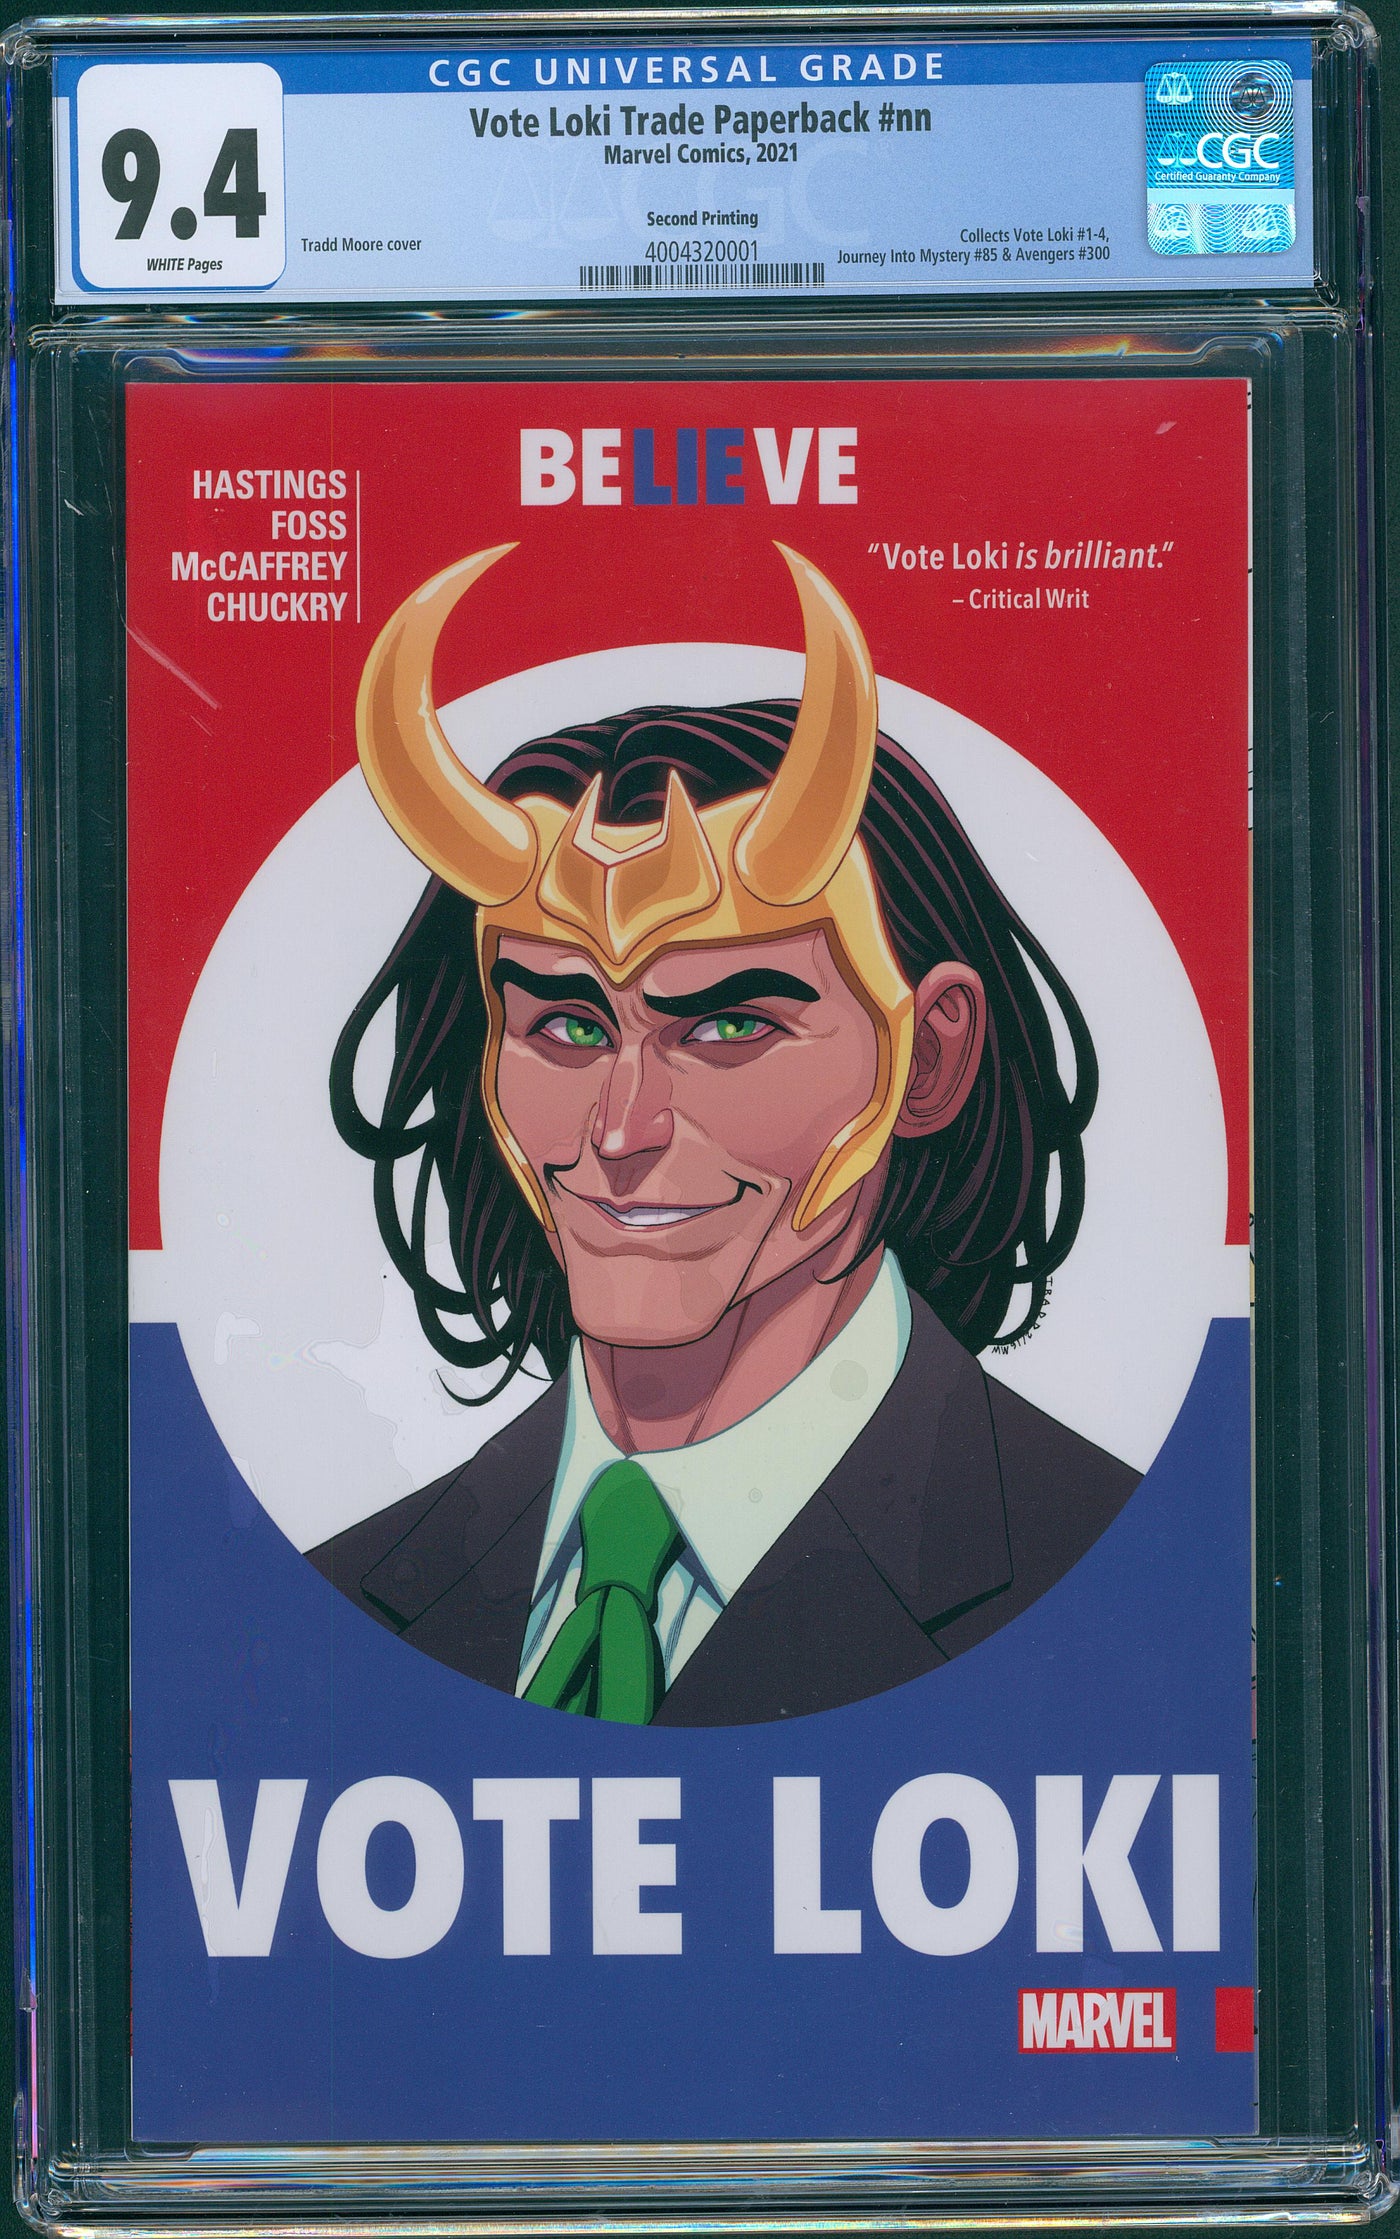 Vote Loki Trade Paperback #nn CGC 9.4